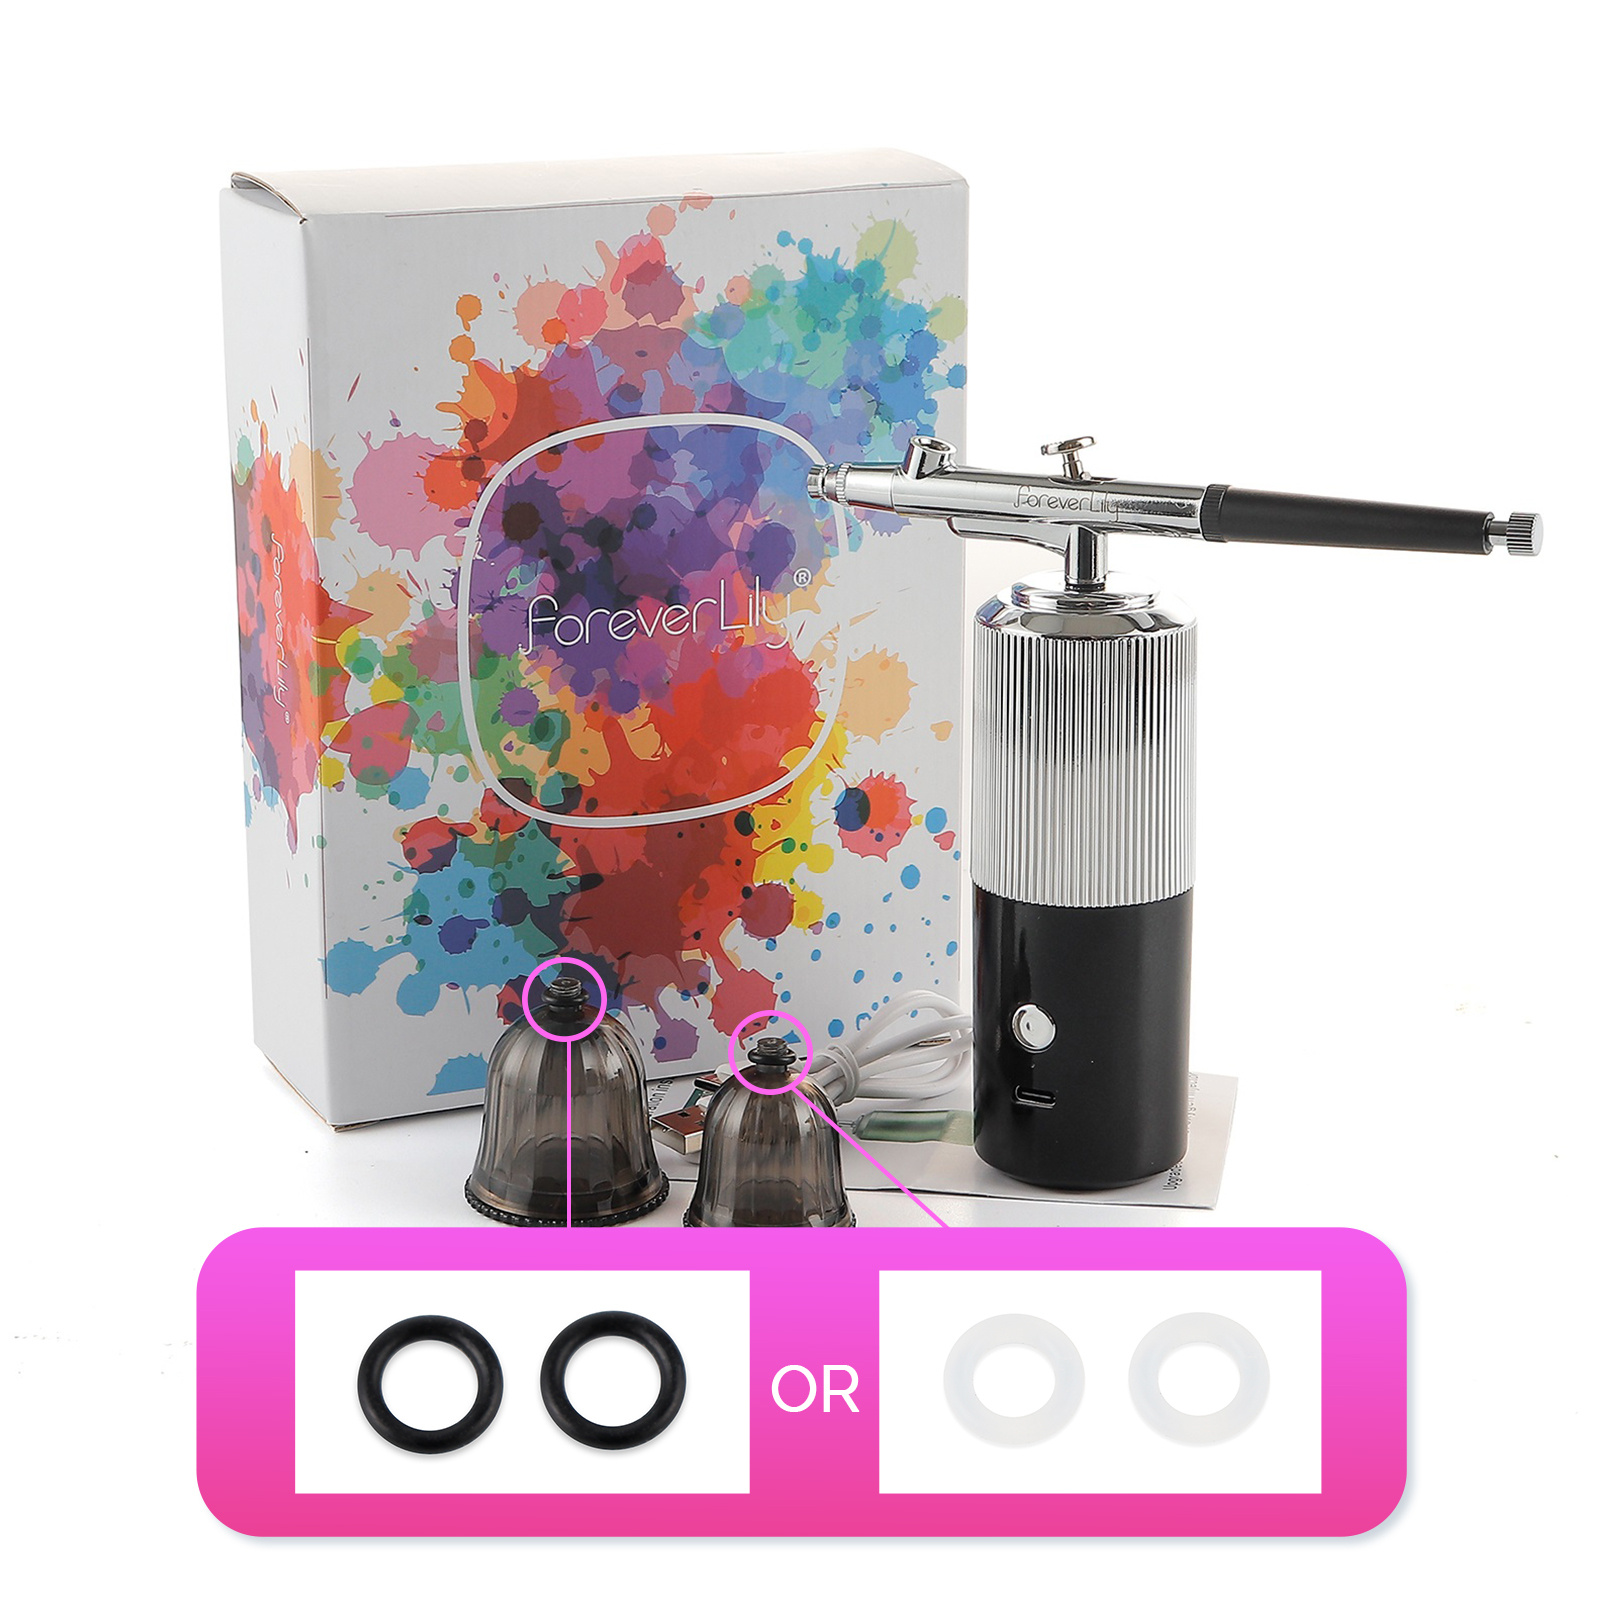 Spray paint color model airbrush air pump small air compressor